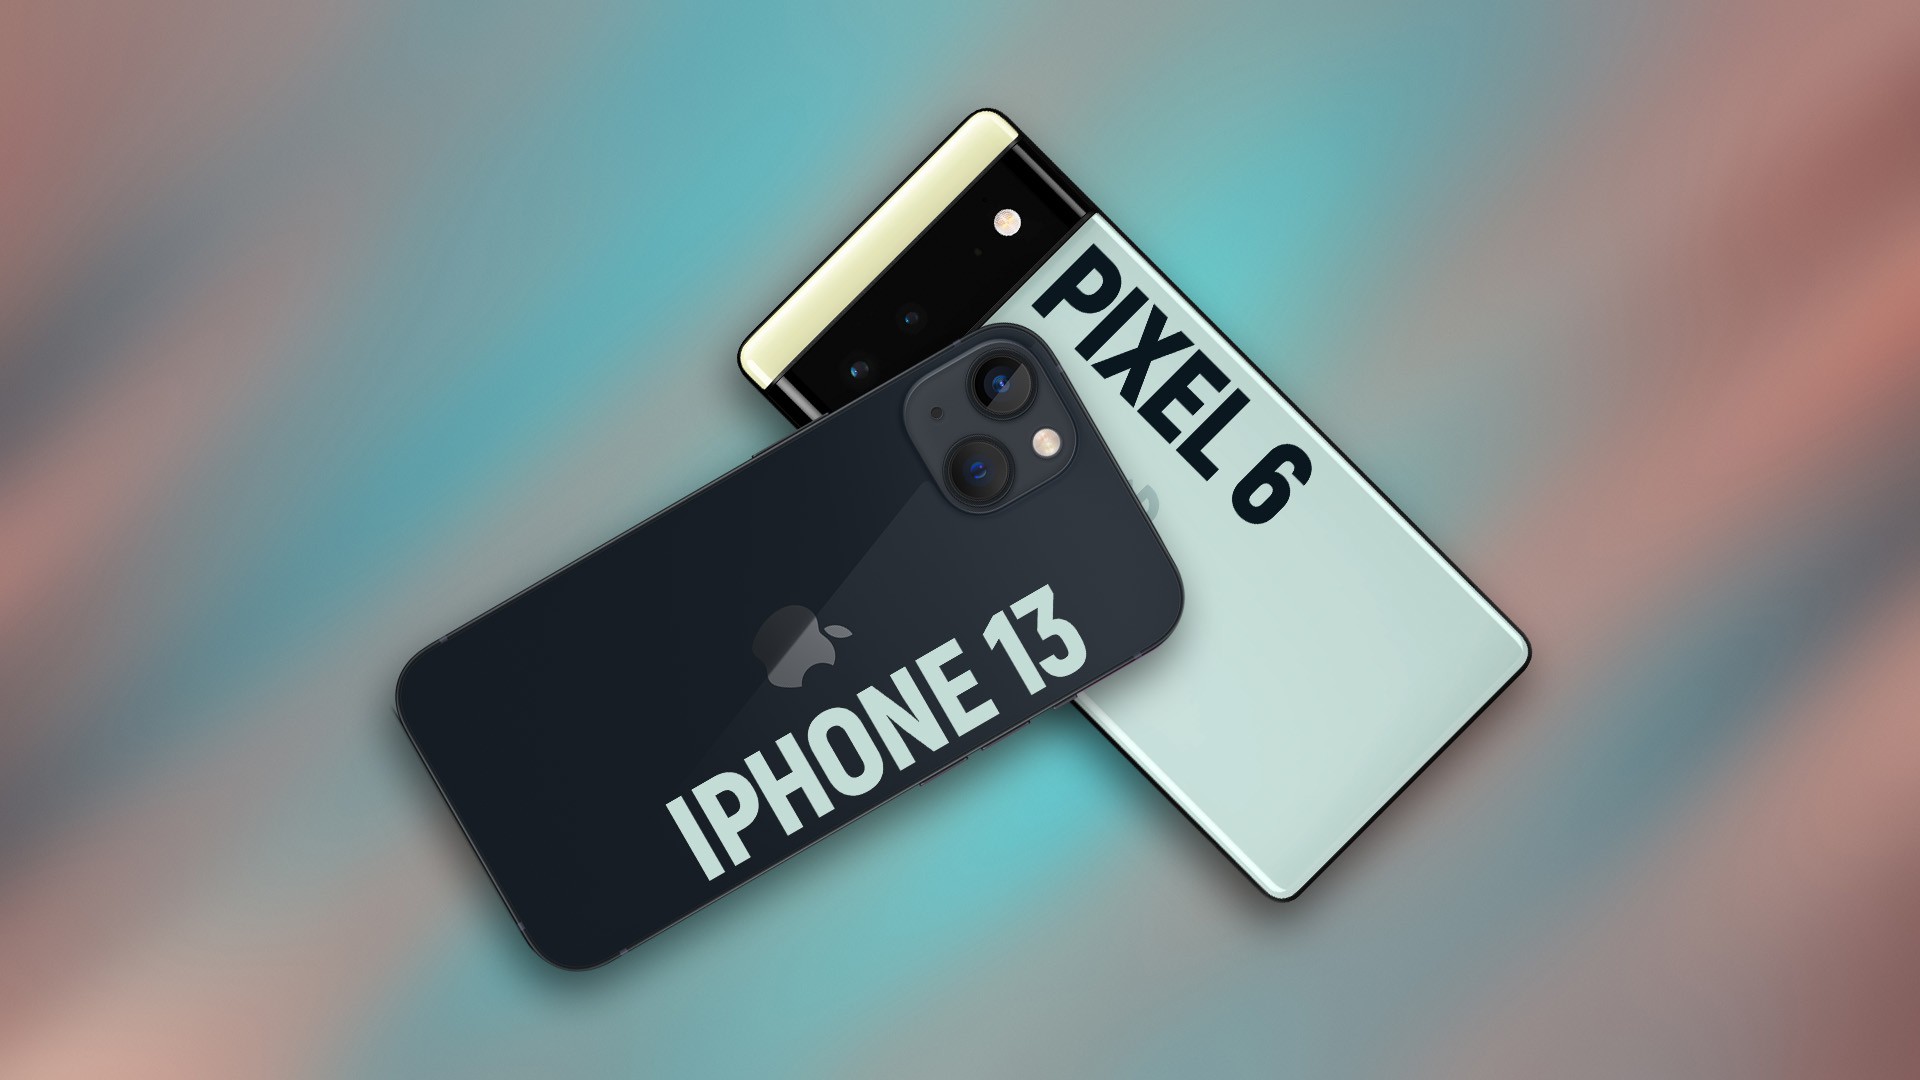 Pixel 6 vs iPhone 13: rivalidade entre Google e Apple aumentou nesta gerao? | Comparativo